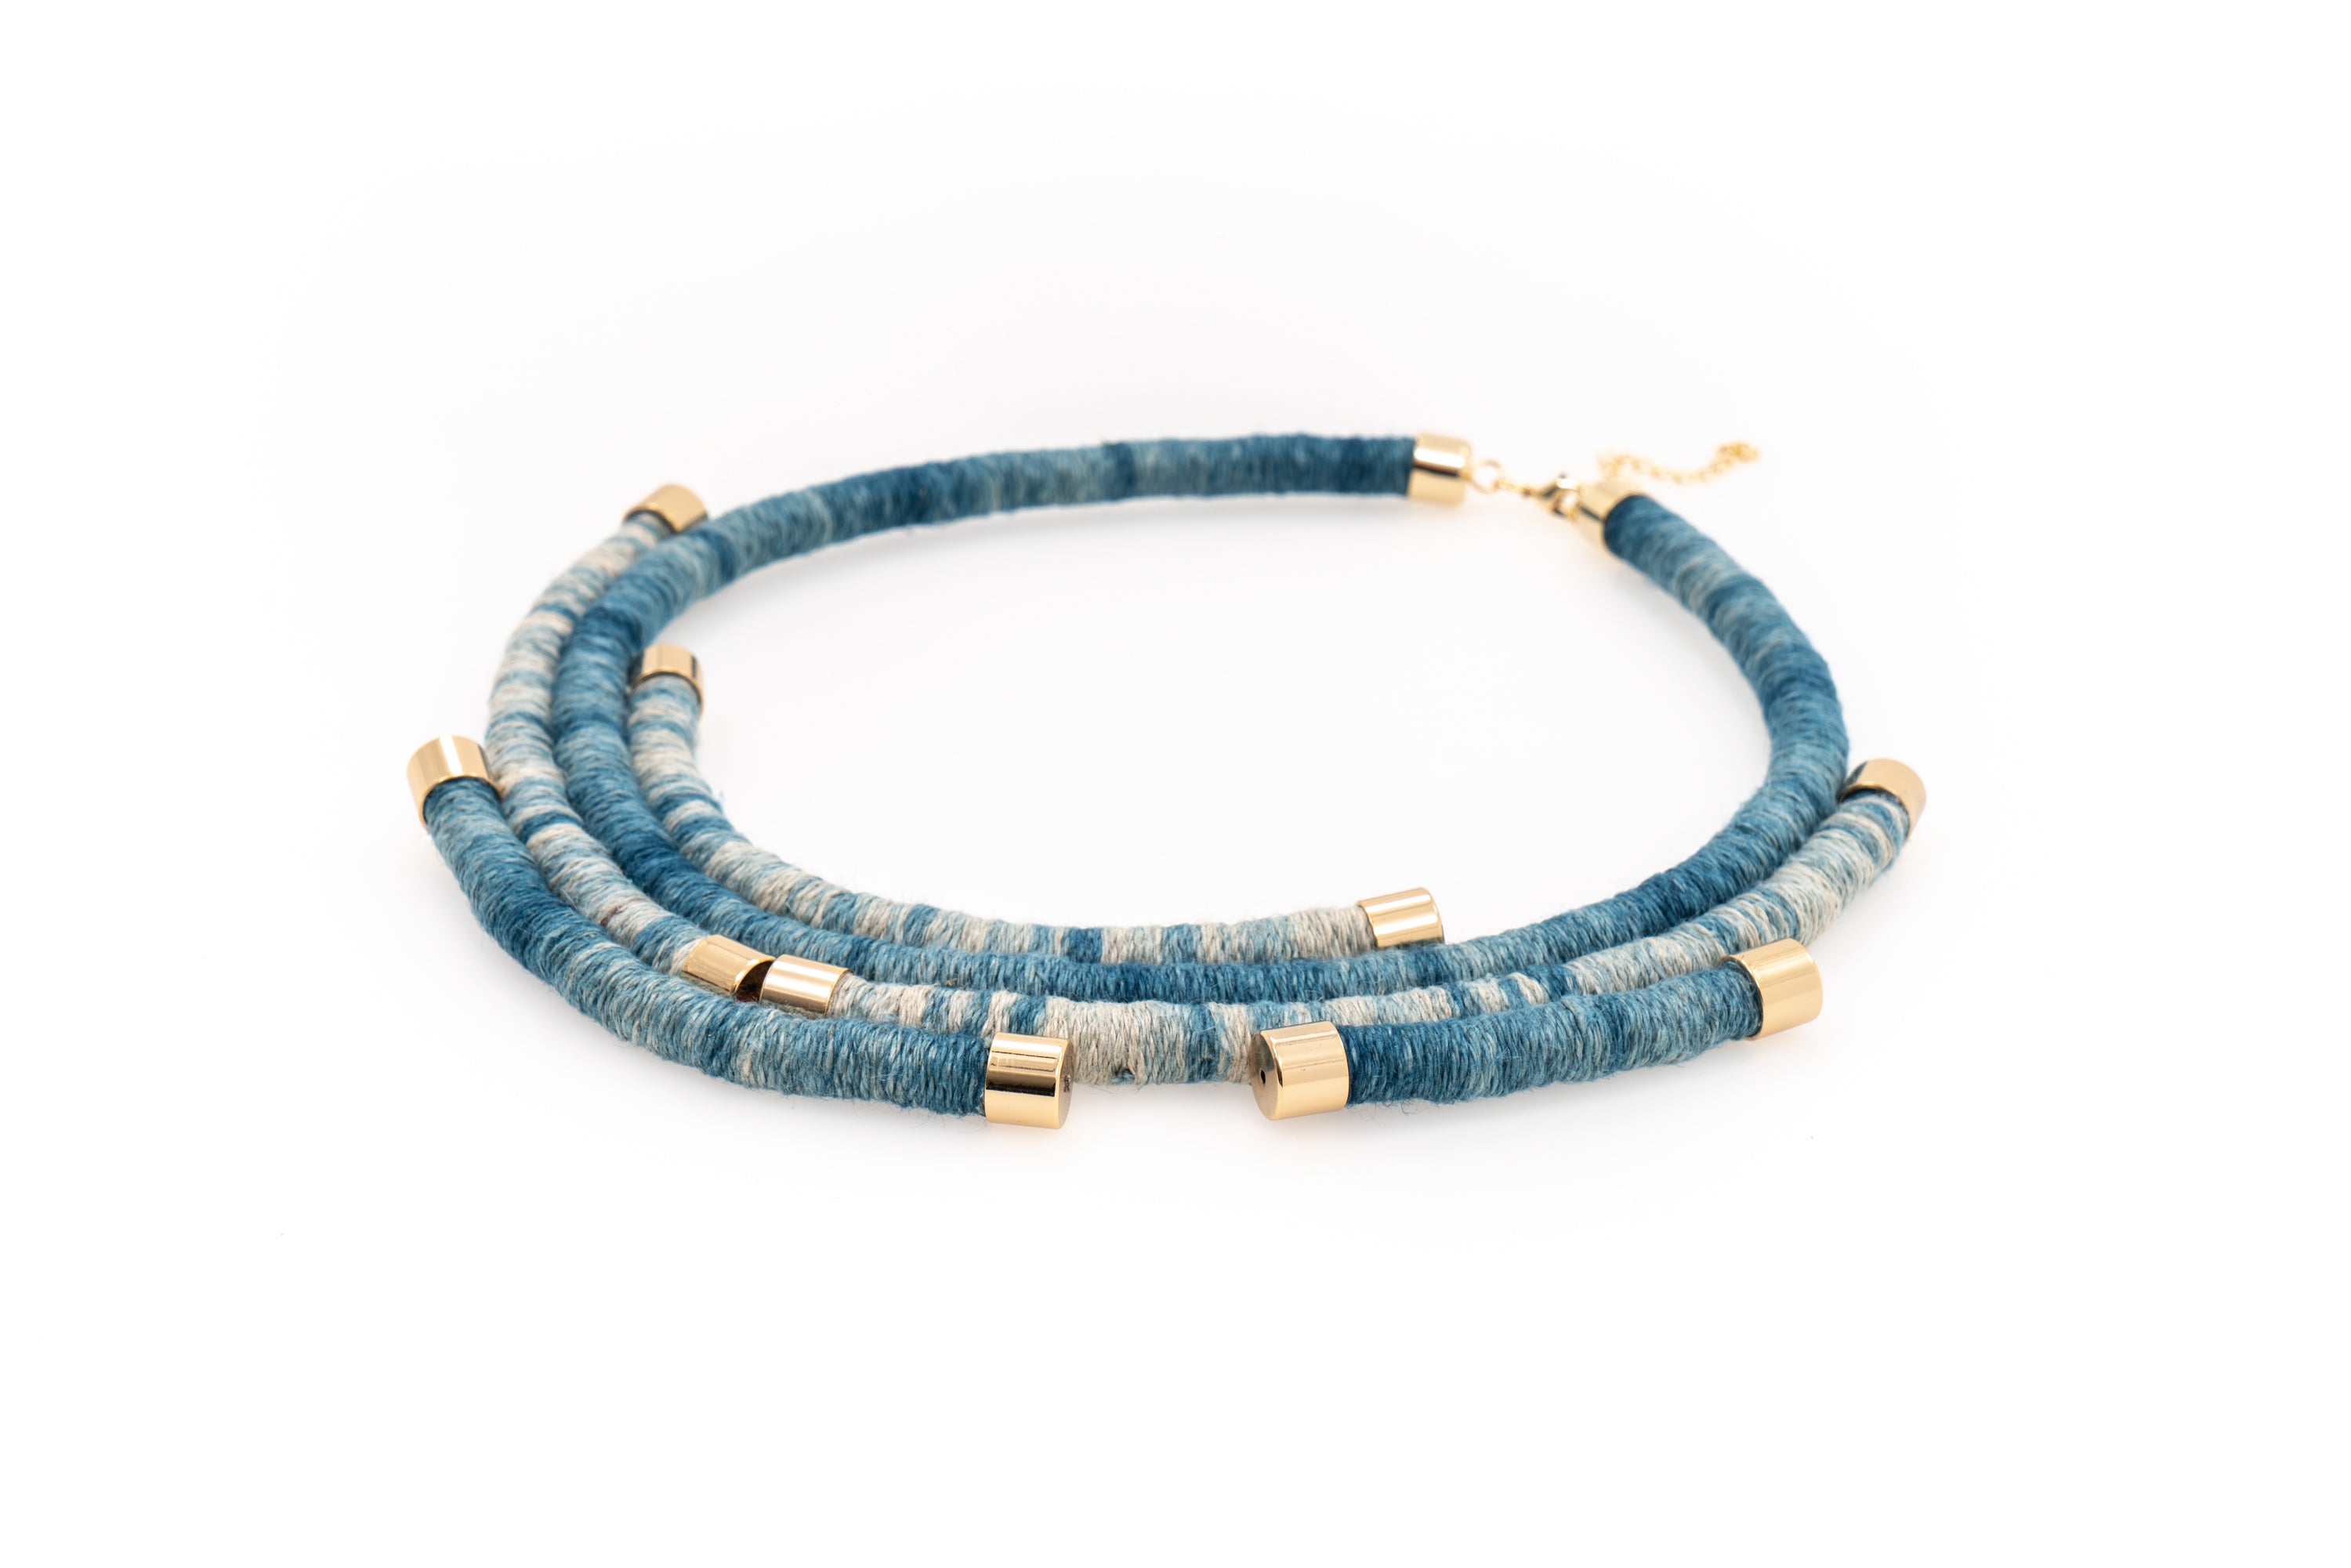 Fiber Art Jewelry Hemp Wrapped Choker Necklace in Dip Dyed Indigo